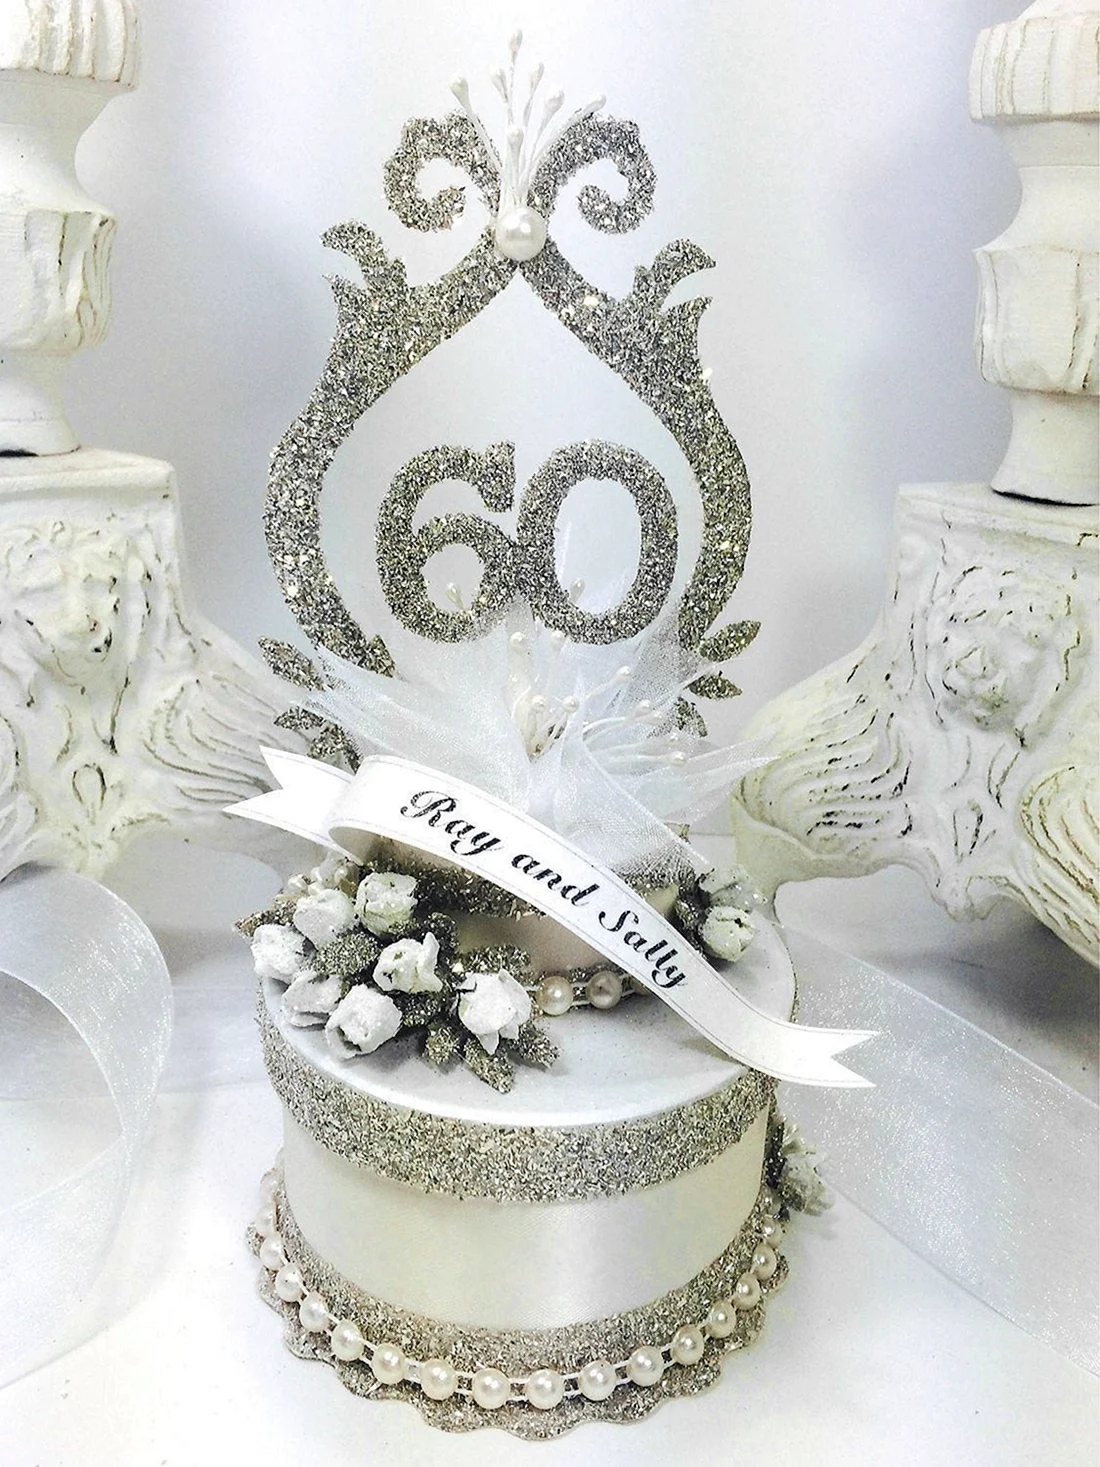 Торт на бриллиантовую свадьбу